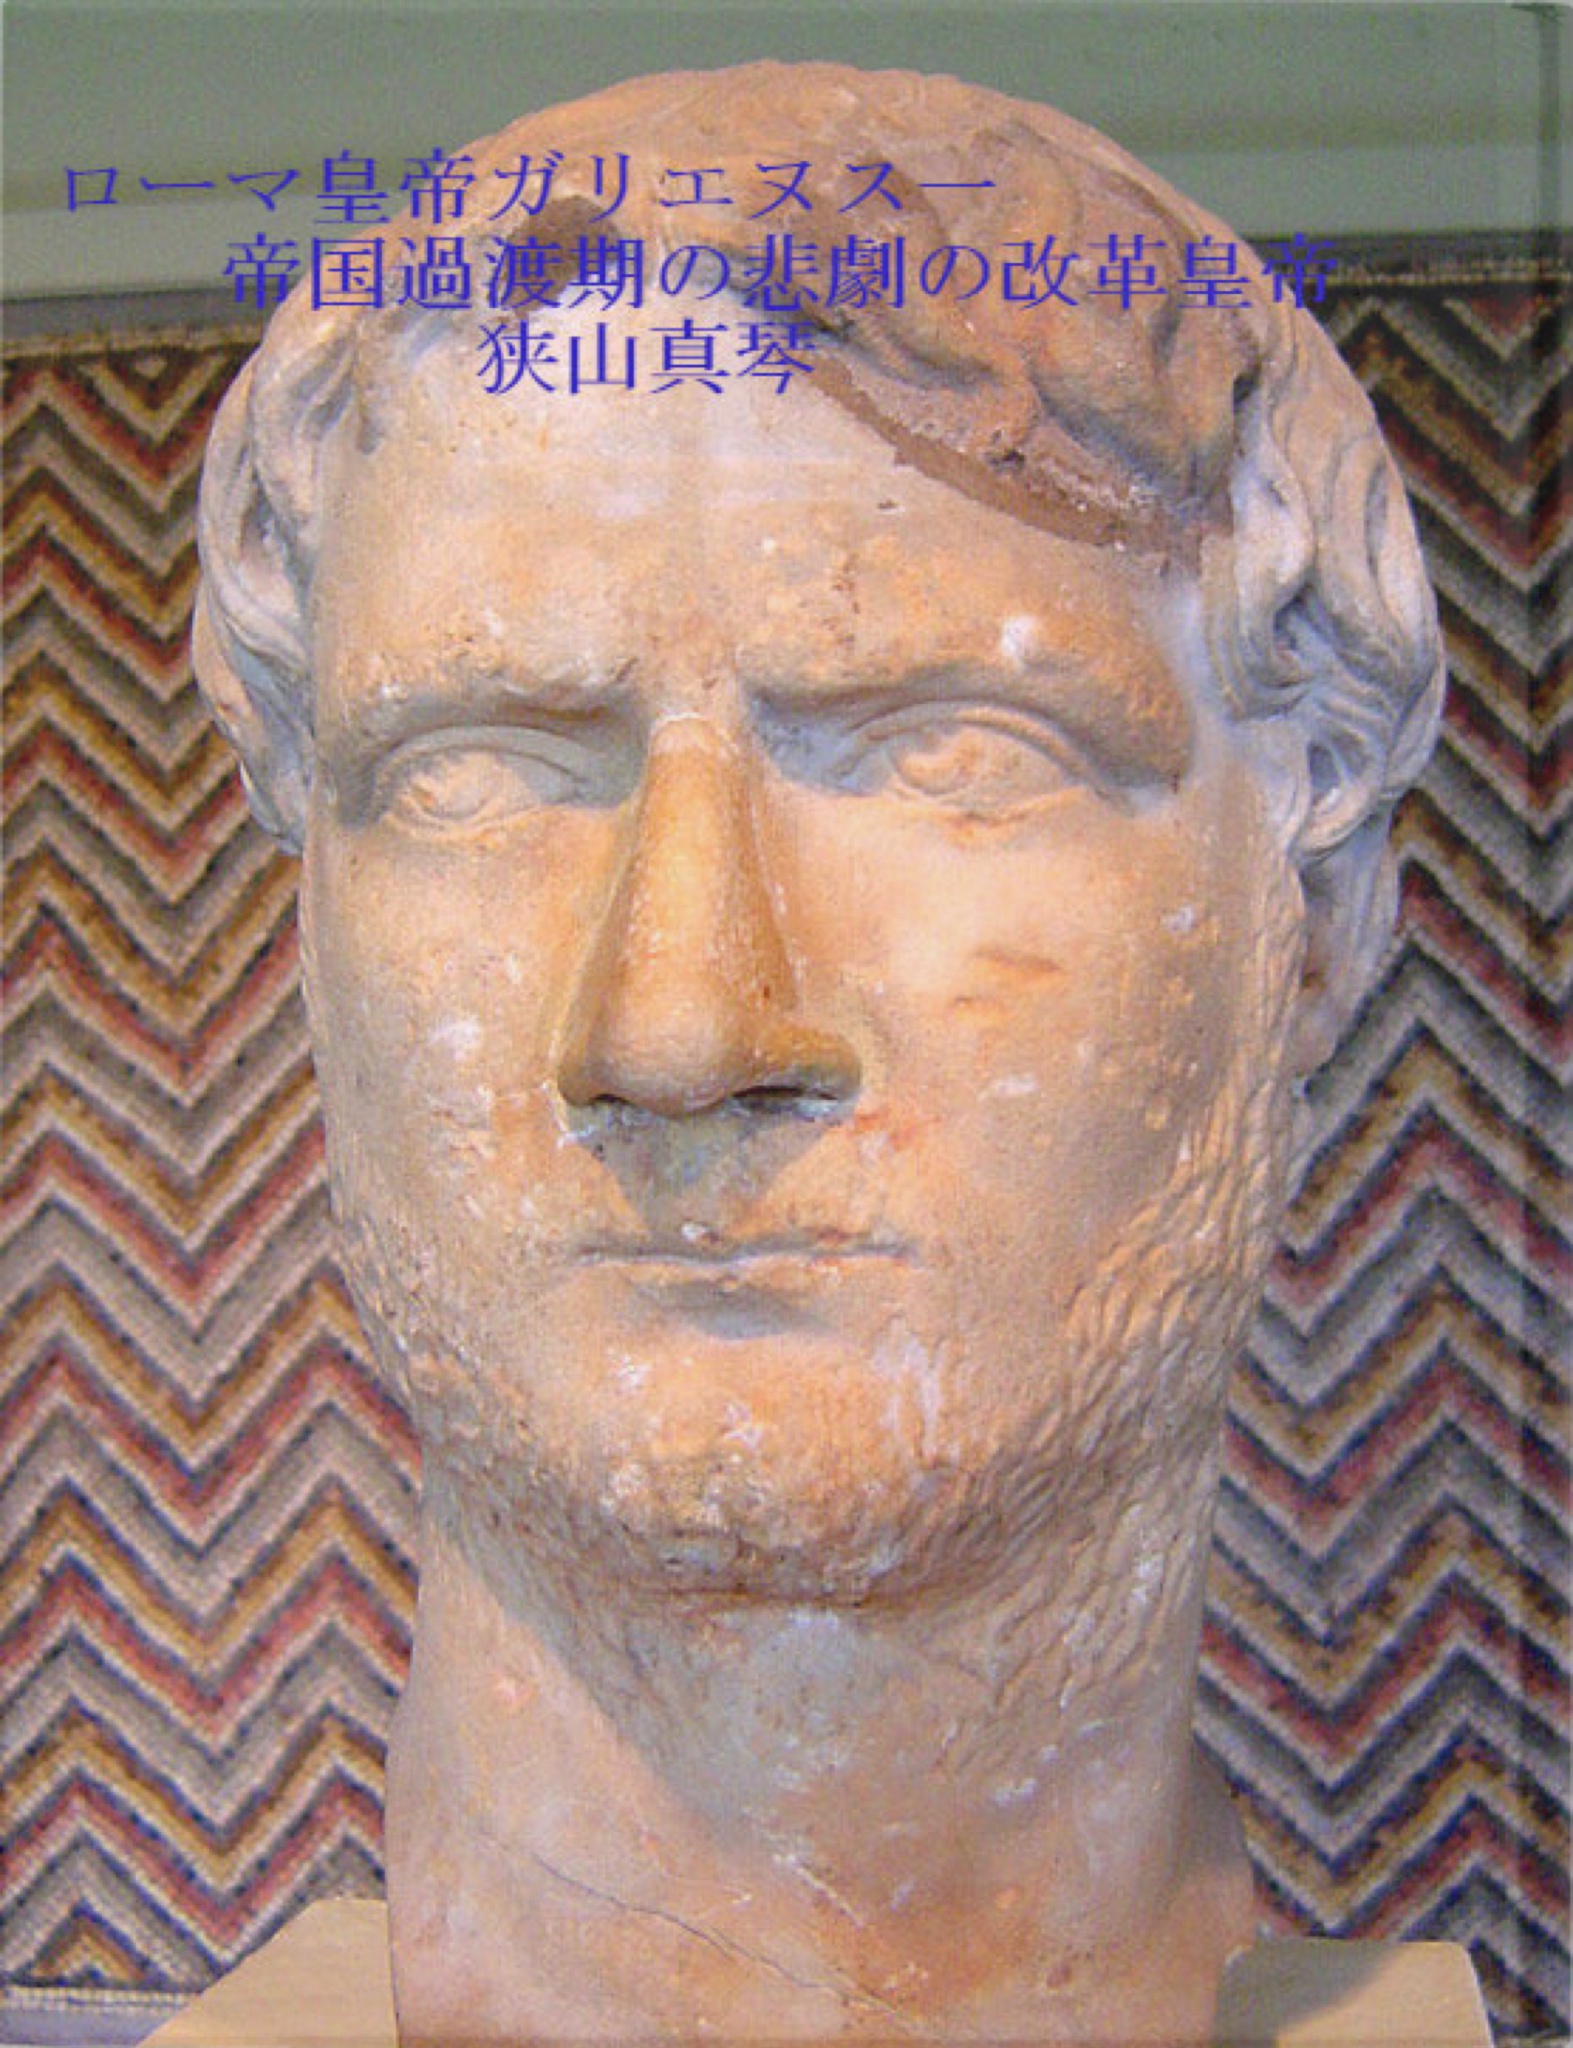 BCCKS / ブックス - 『ローマ皇帝ガリエヌス一 帝国過渡期の悲劇の改革皇帝』狭山真琴著